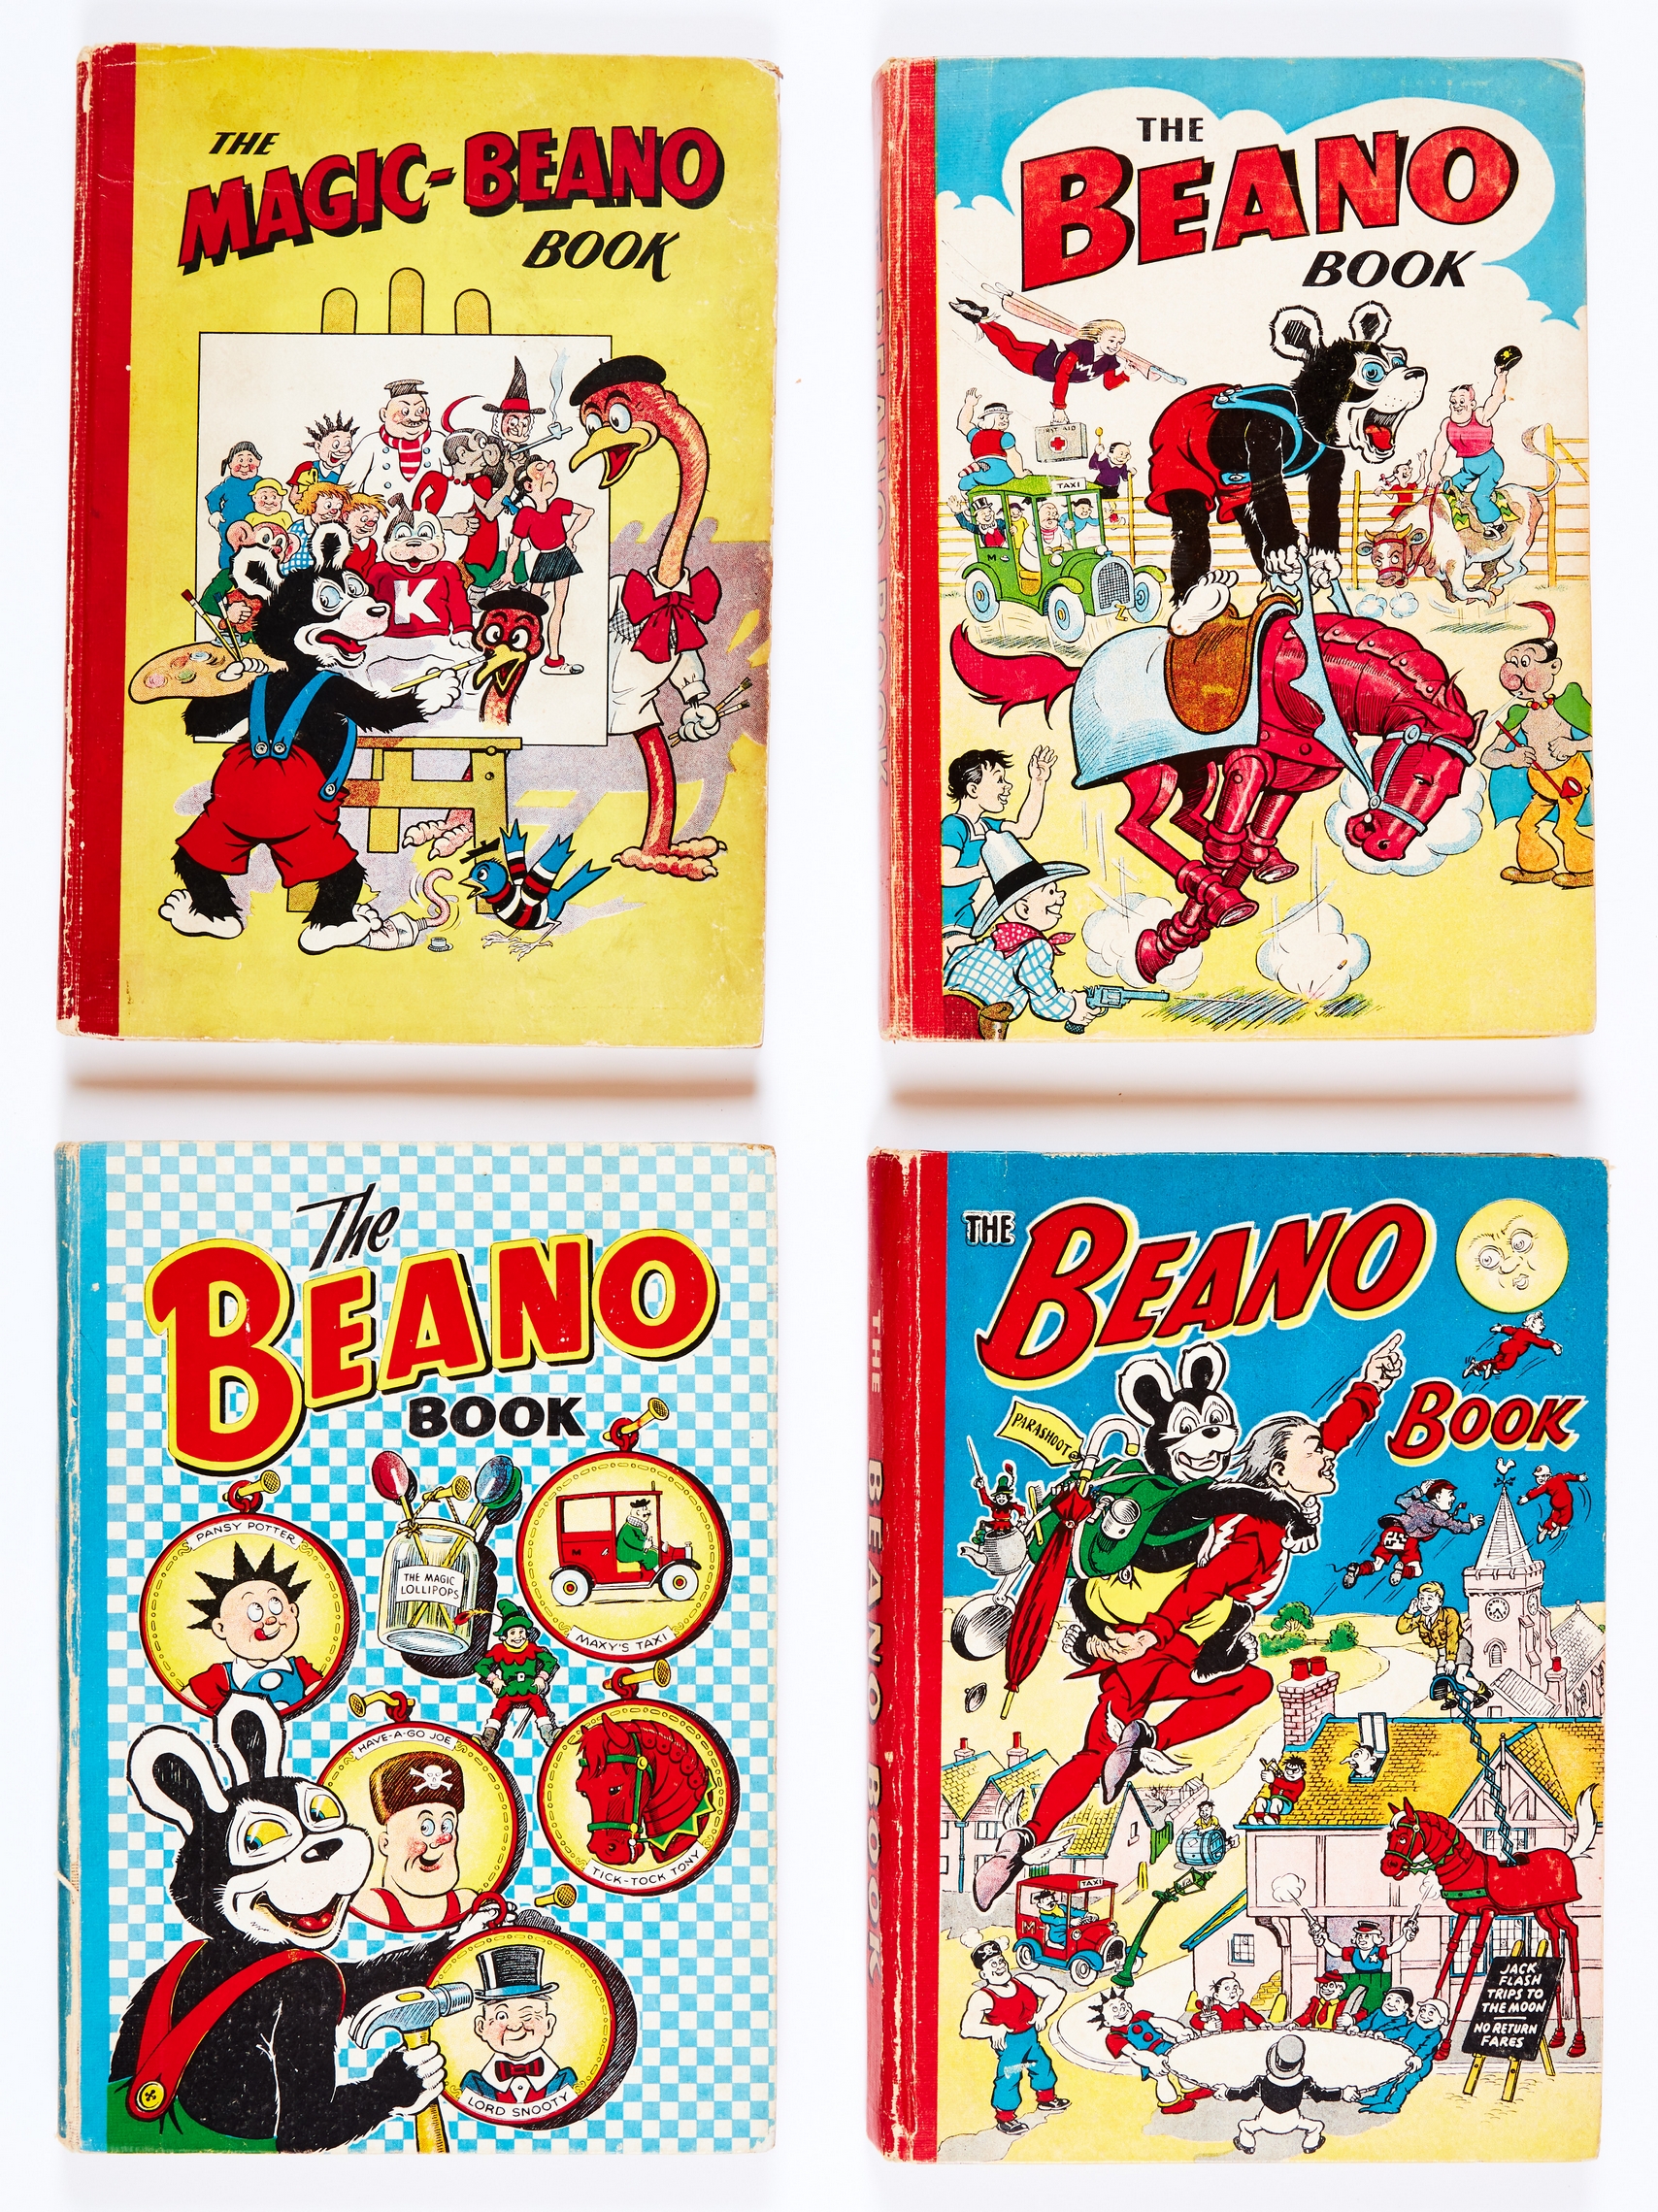 Magic-Beano Book 1950 [vg], Beano Book 1951 [vg], 1952 [vg+], 1953 [vg/fn] (4)